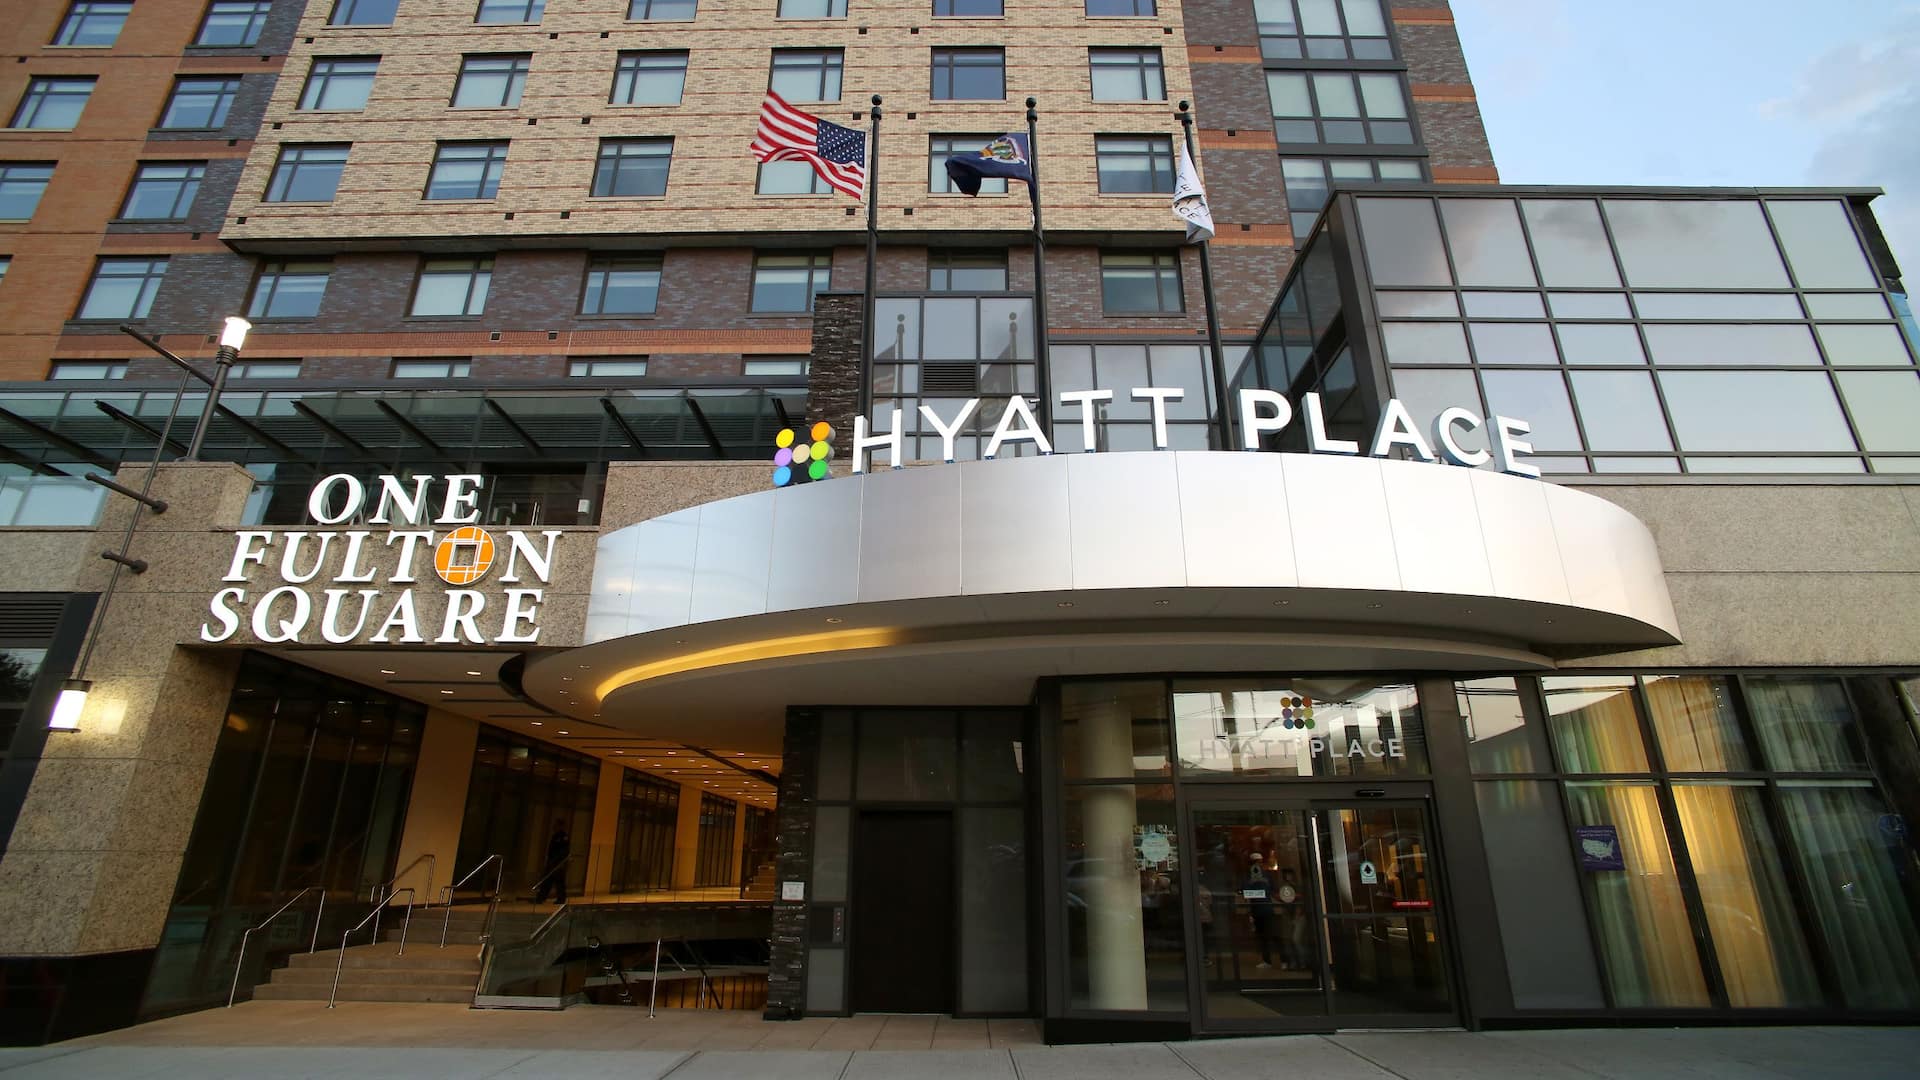 Hyatt Place Flushing / LaGuardia Airport Exterior Street